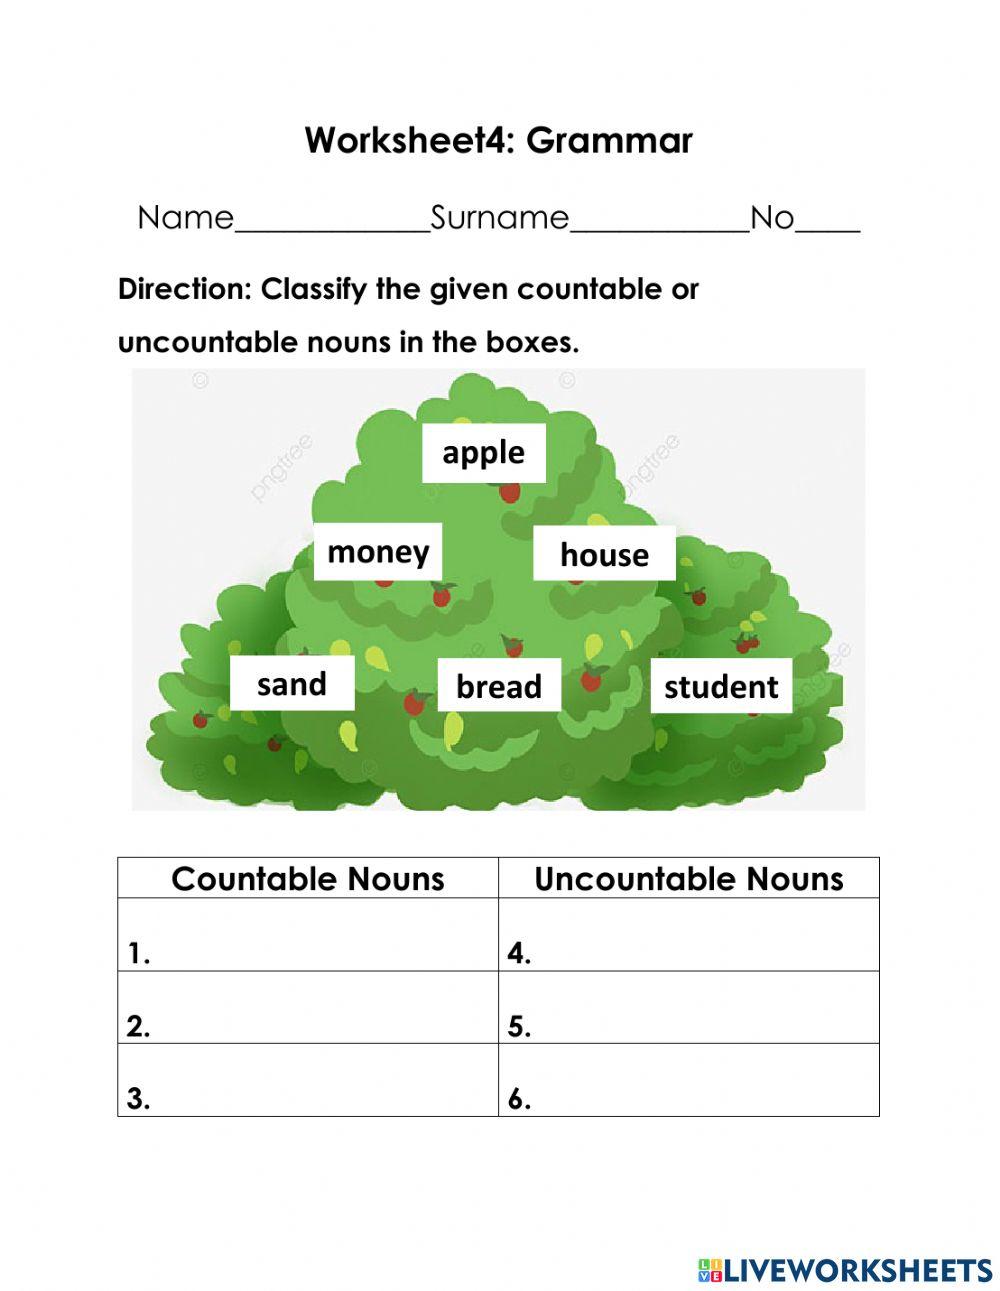 Countable and Uncountable noun